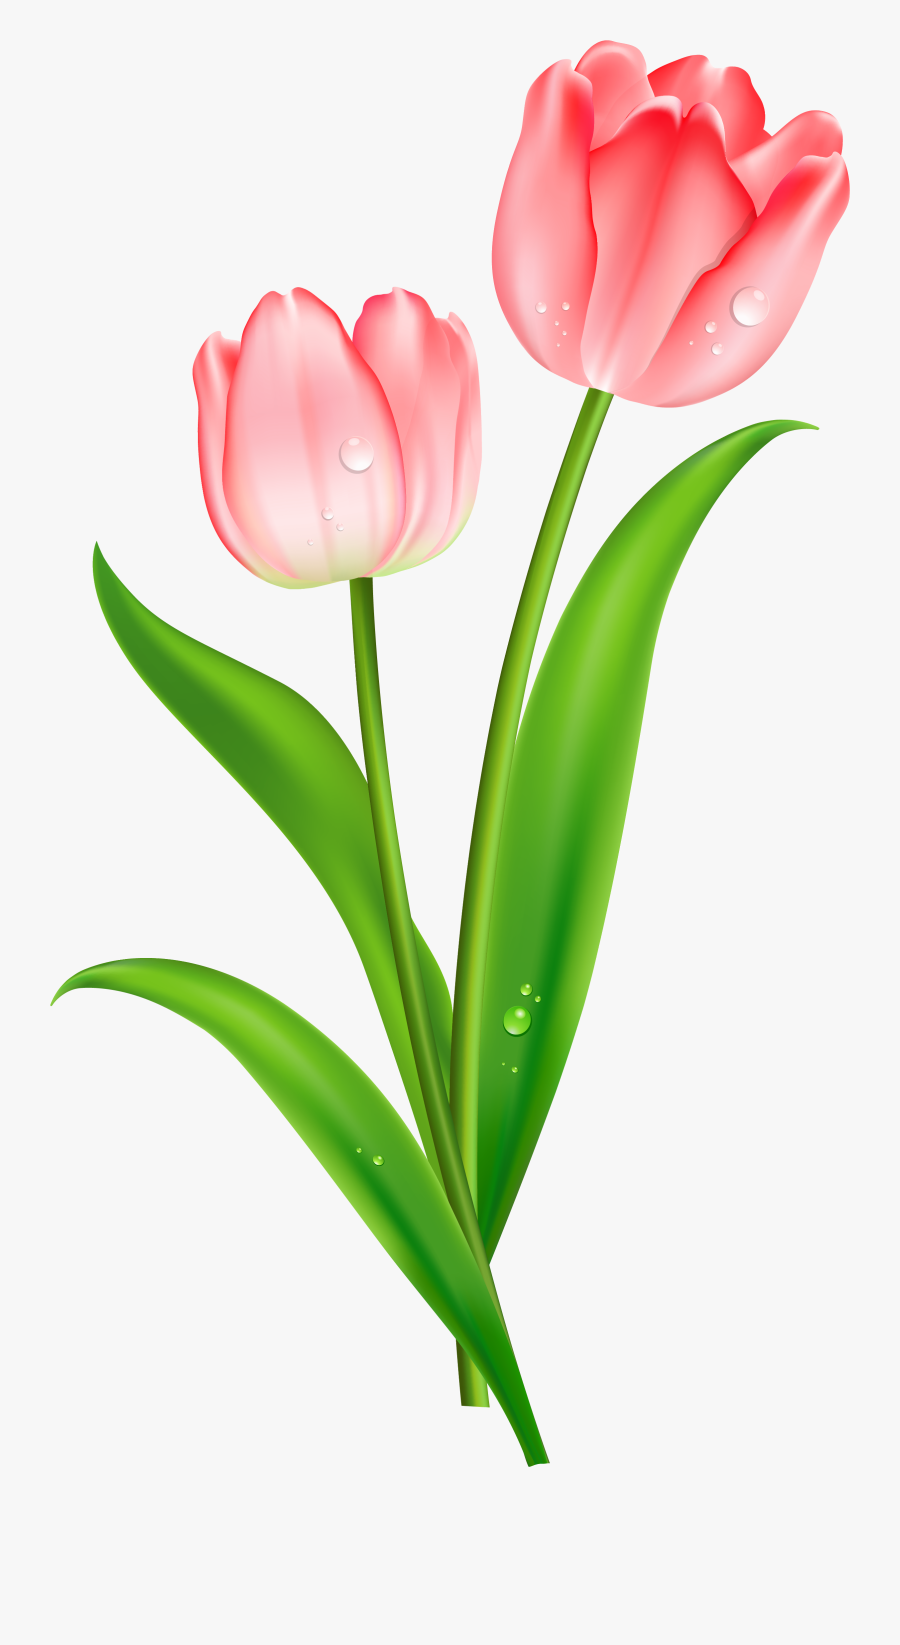 Tulip Clipart - Tulips Clipart, Transparent Clipart